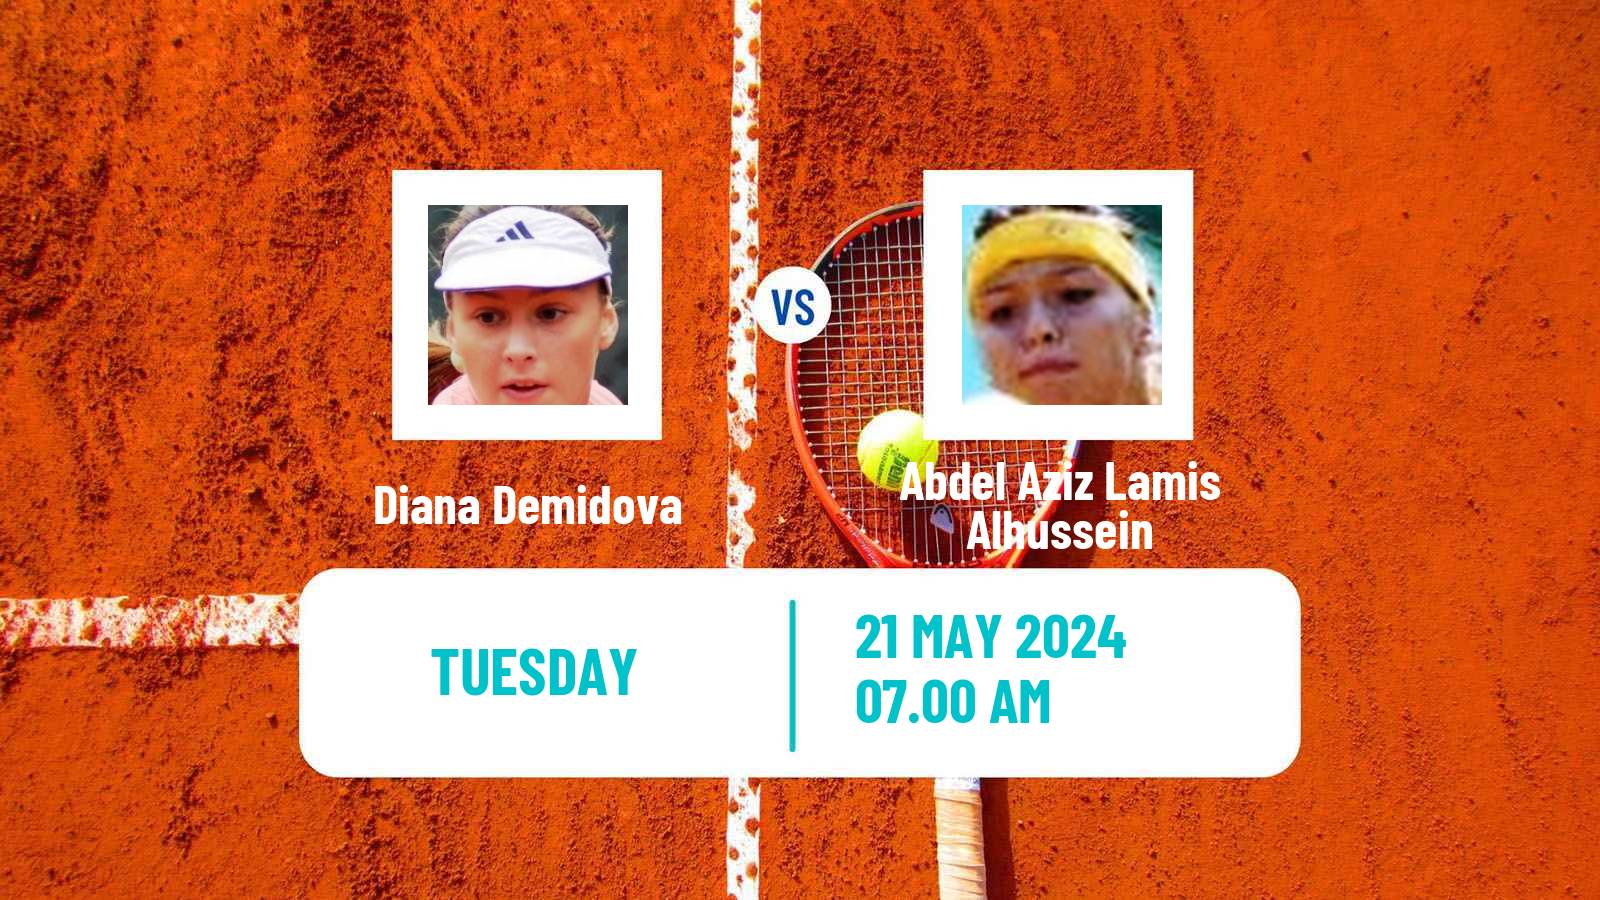 Tennis ITF W15 Monastir 19 Women Diana Demidova - Abdel Aziz Lamis Alhussein